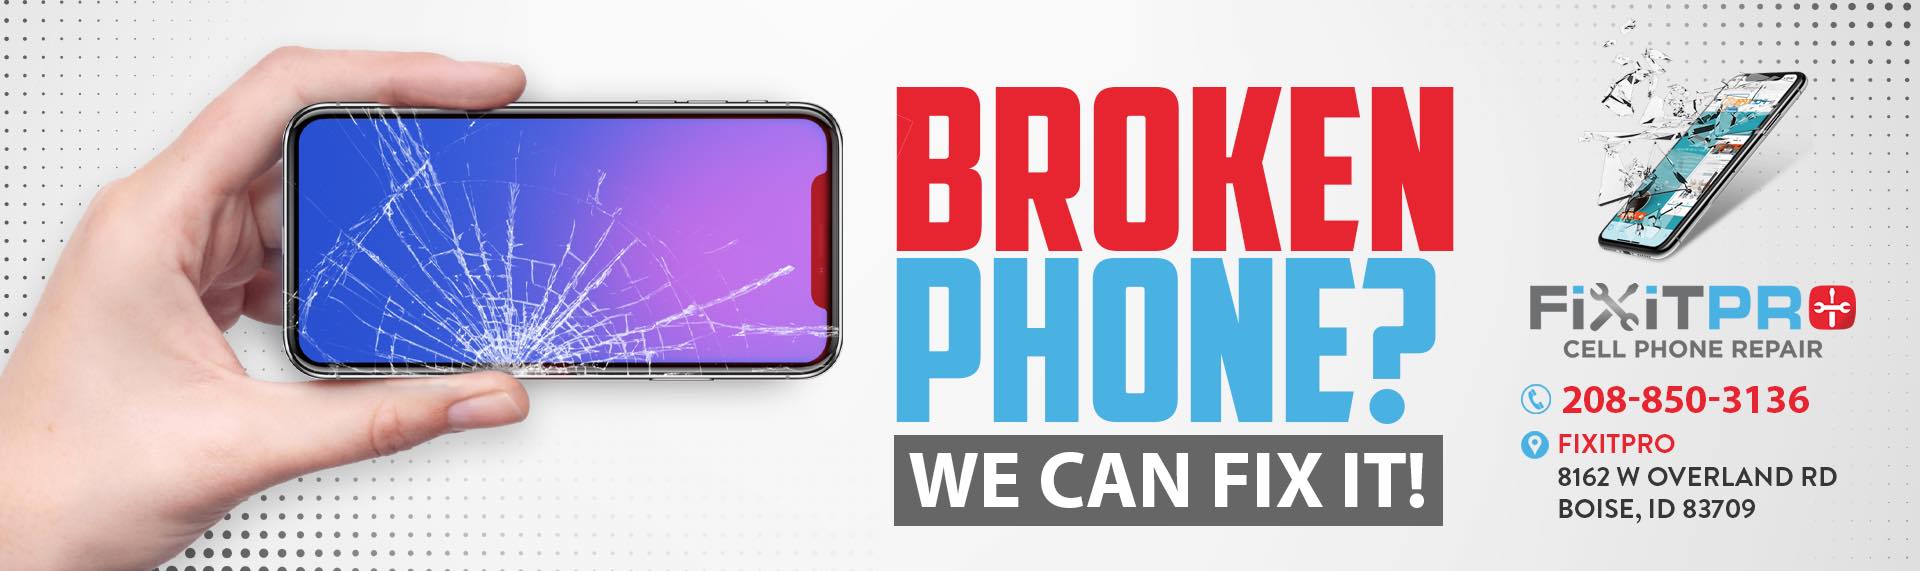 FixitPro Cell Phone Repair